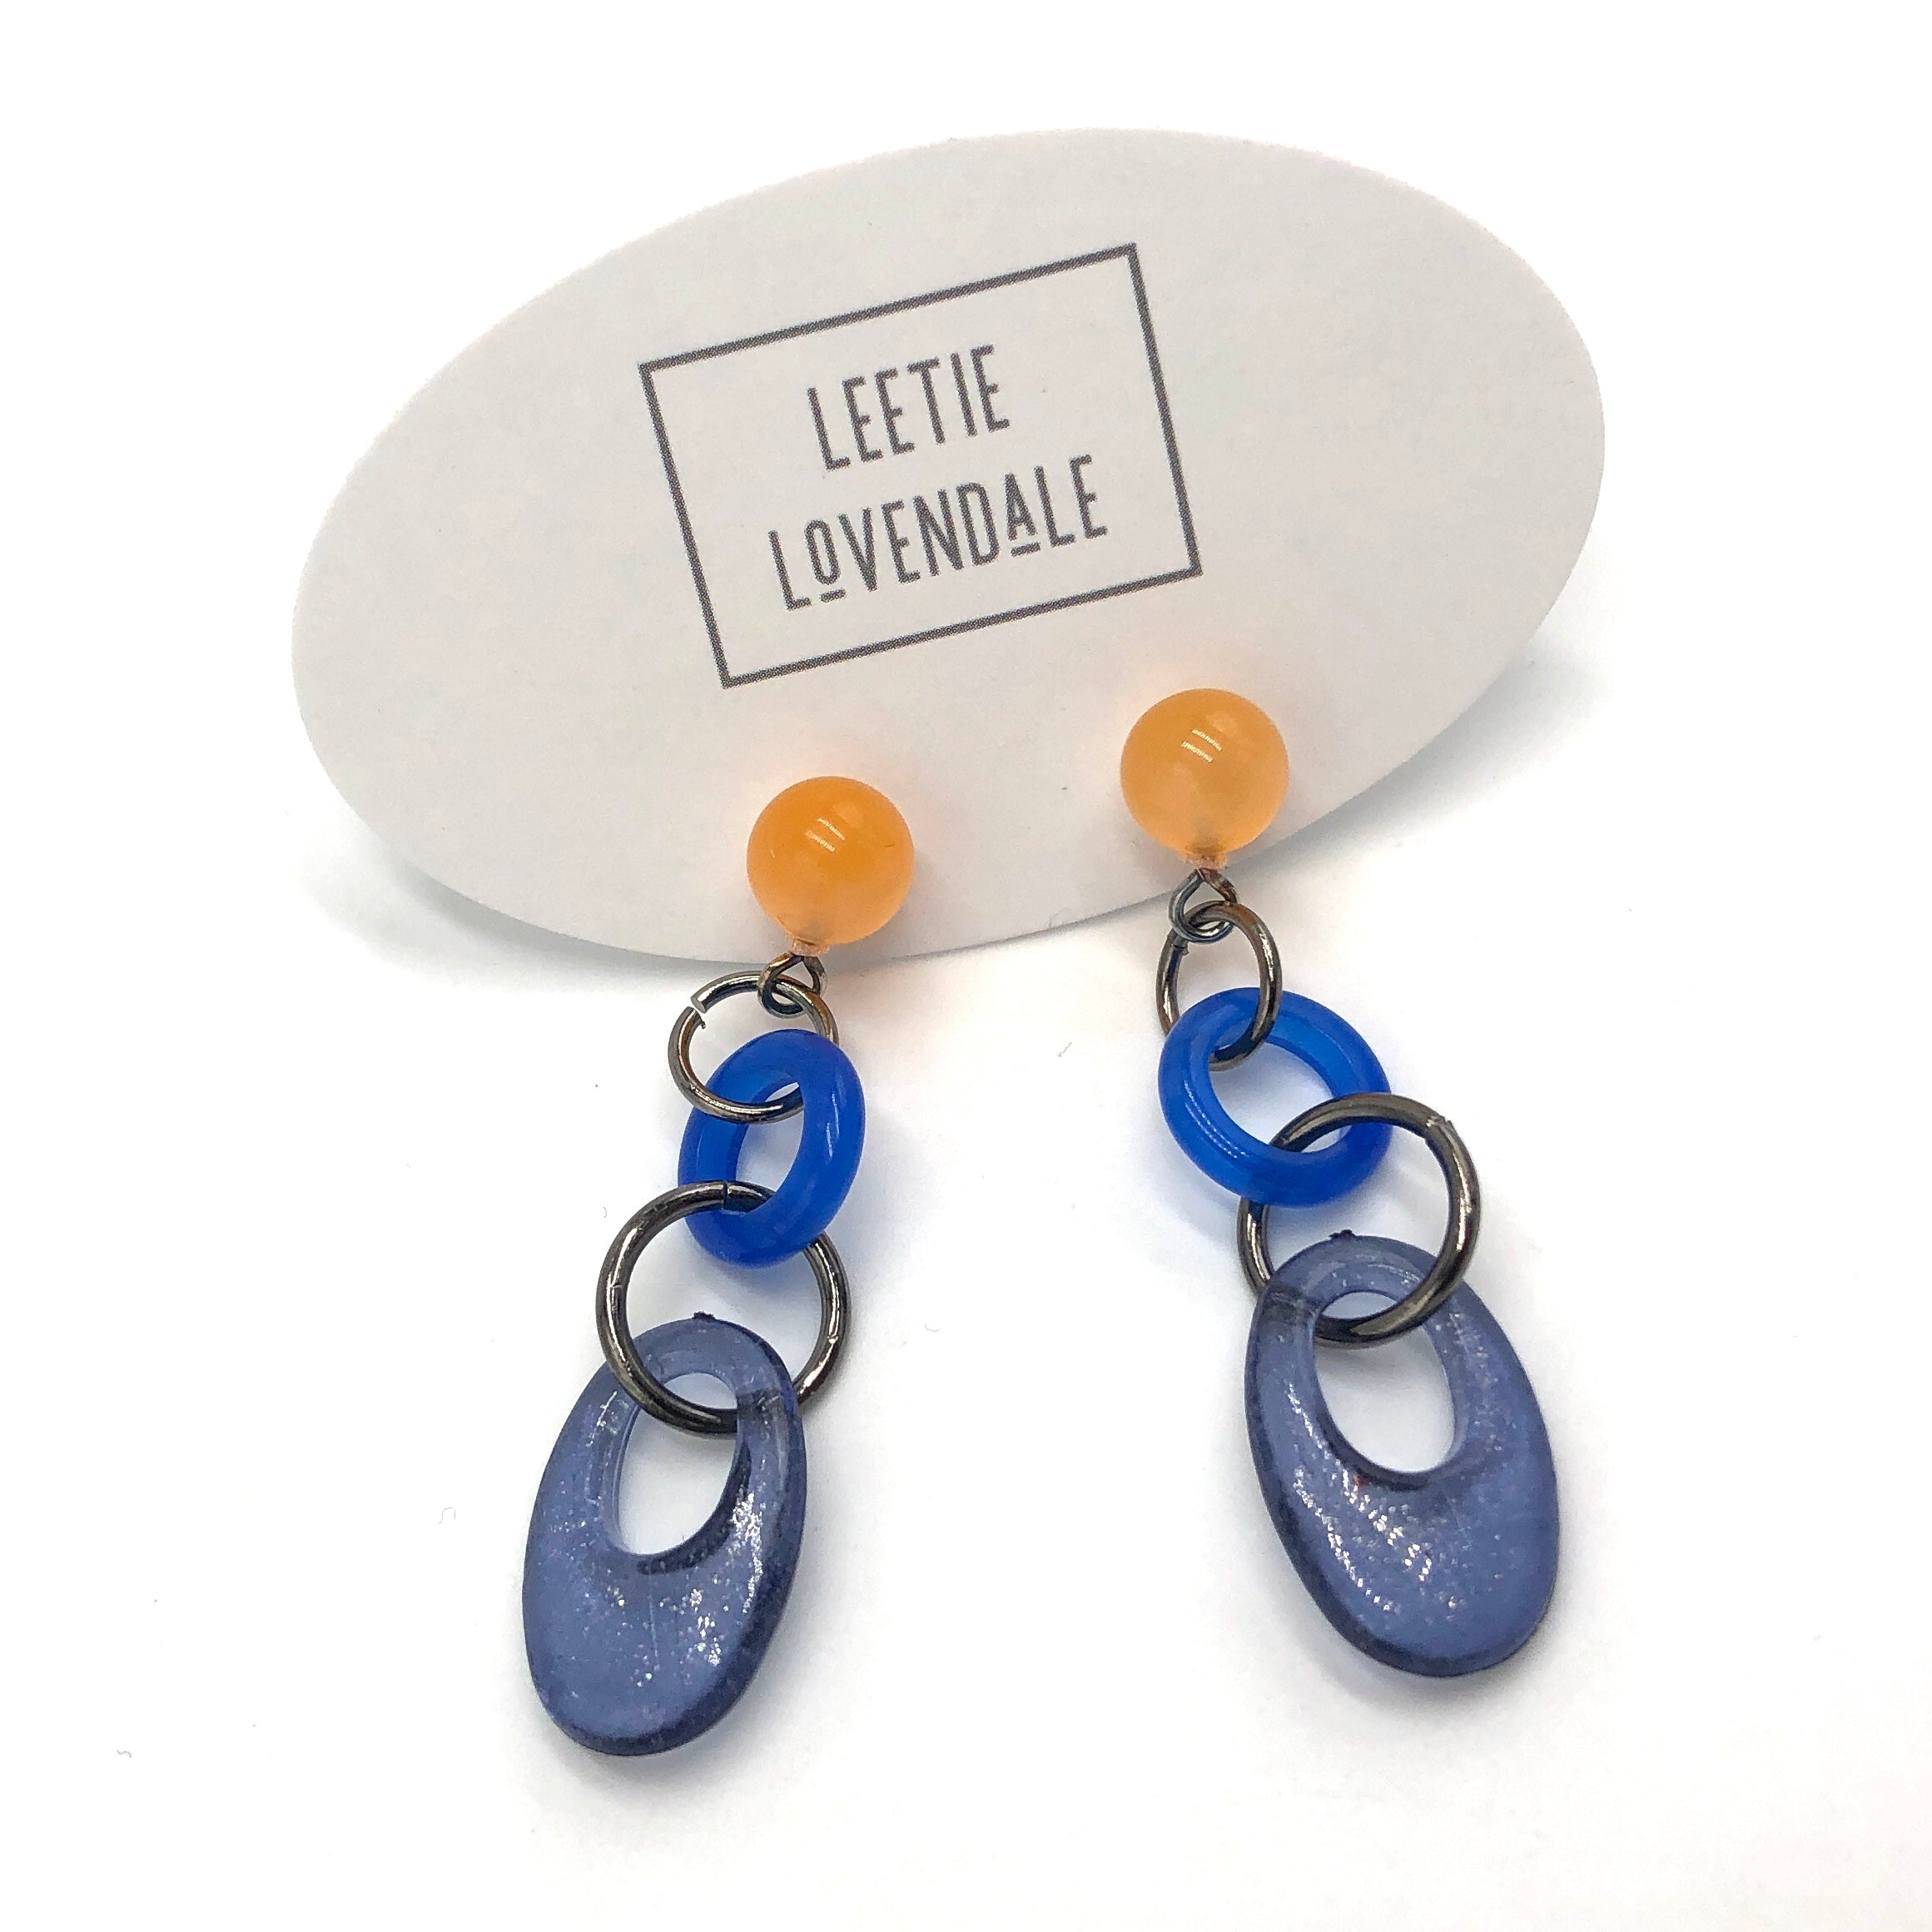 blue and orange earrings